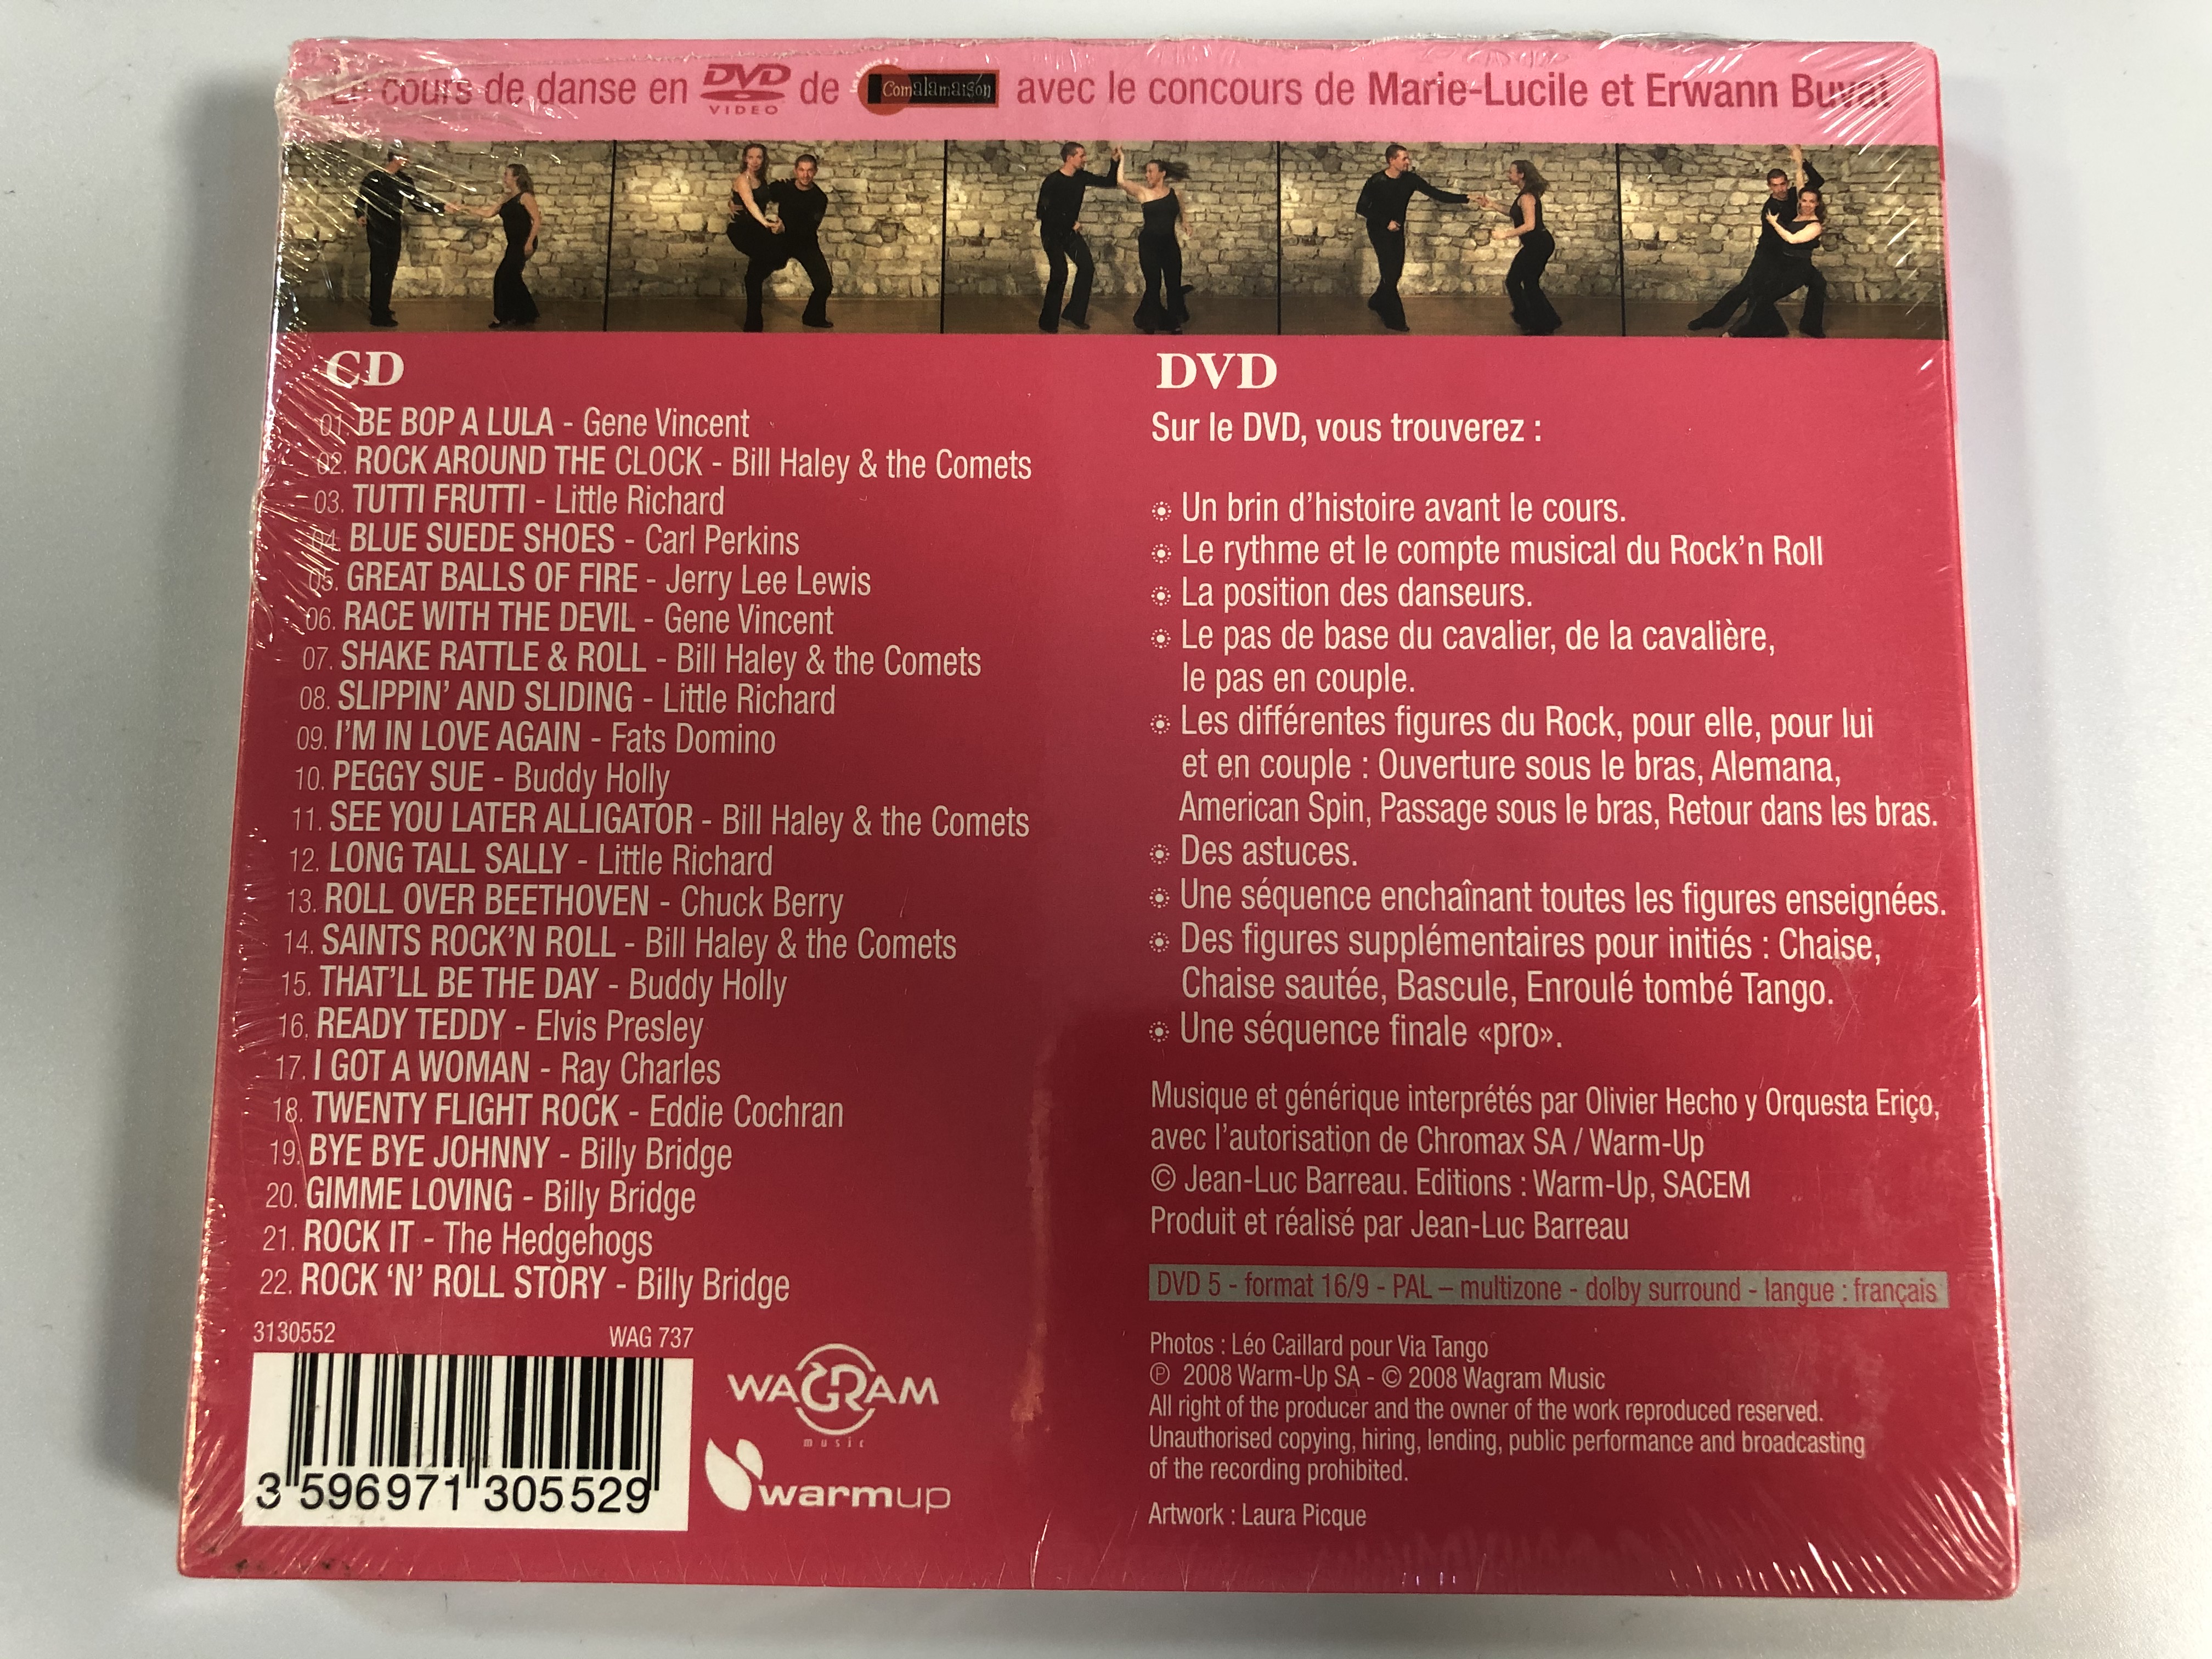 Rock'n'Roll - Collection Dansez! / Wagram Music Audio CD + DVD 2008 /  3130552 - bibleinmylanguage